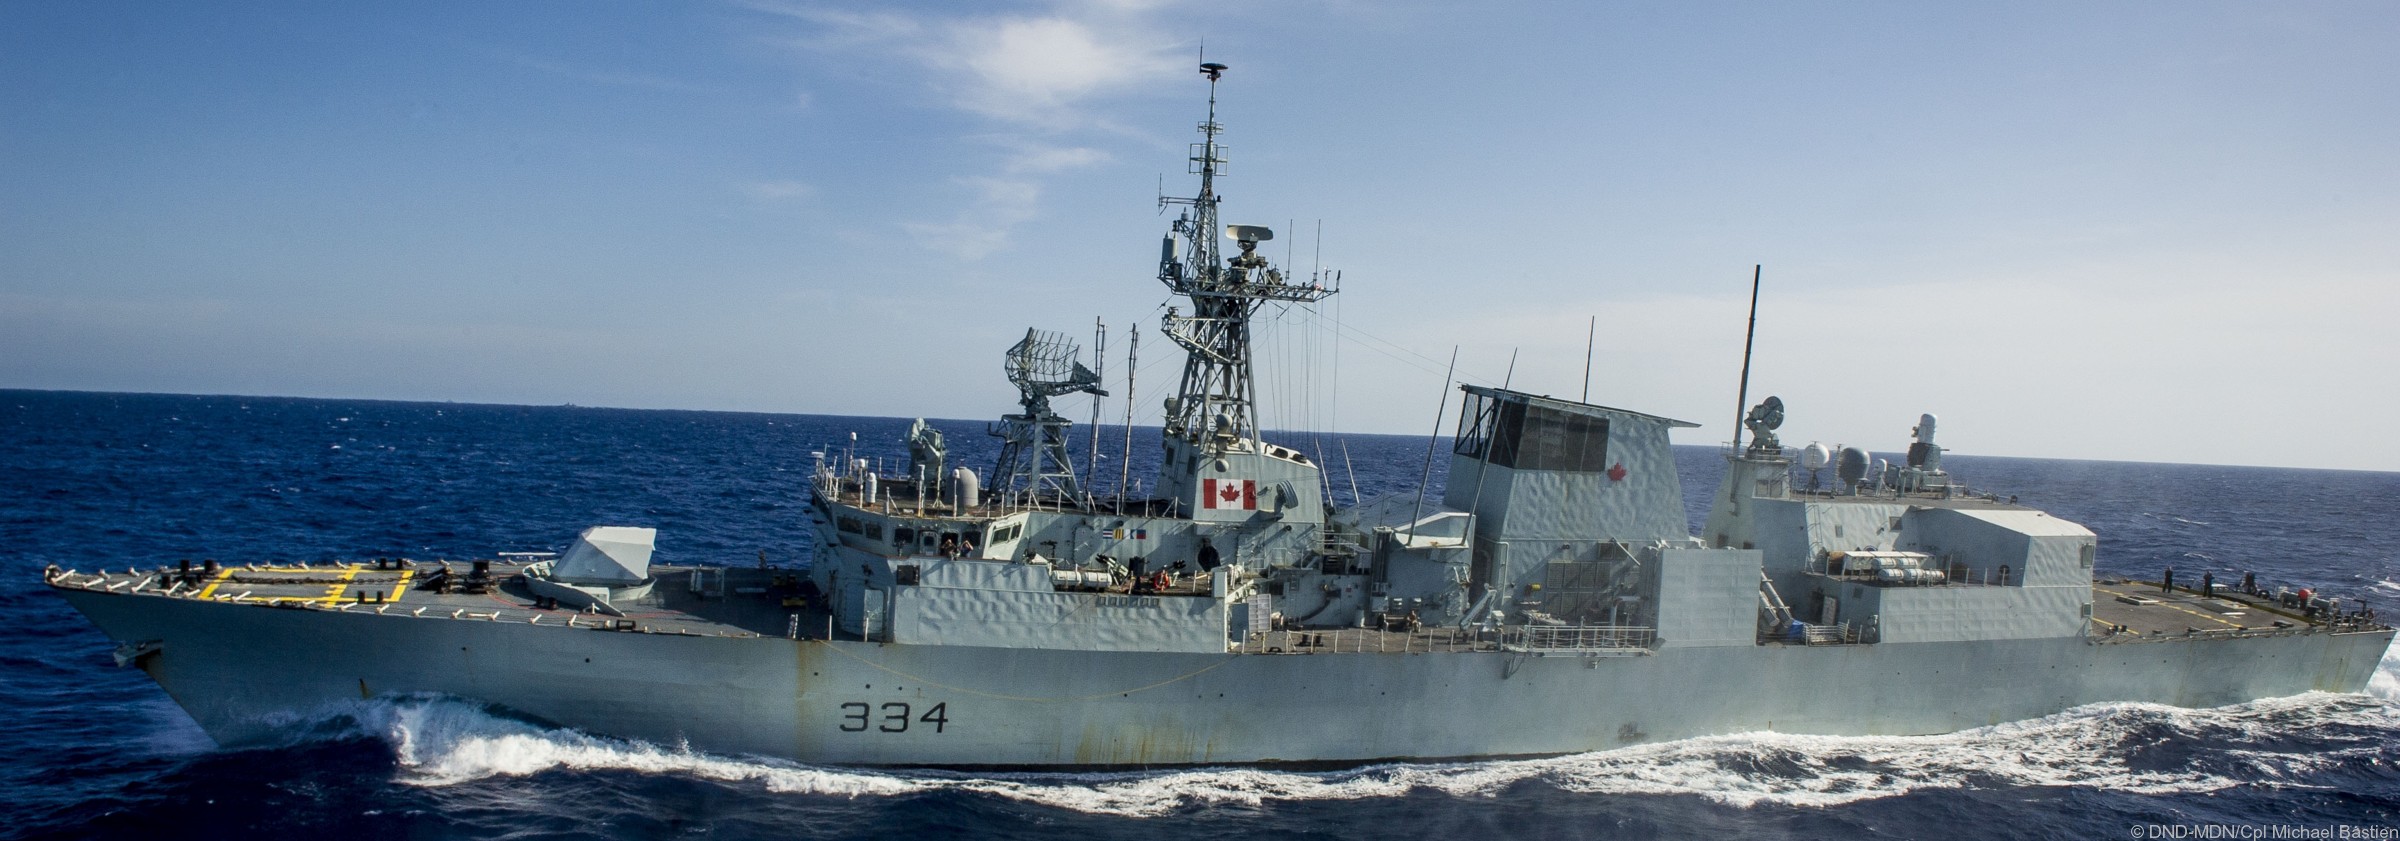 ffh-334 hmcs regina halifax class helicopter patrol frigate ncsm royal canadian navy 08